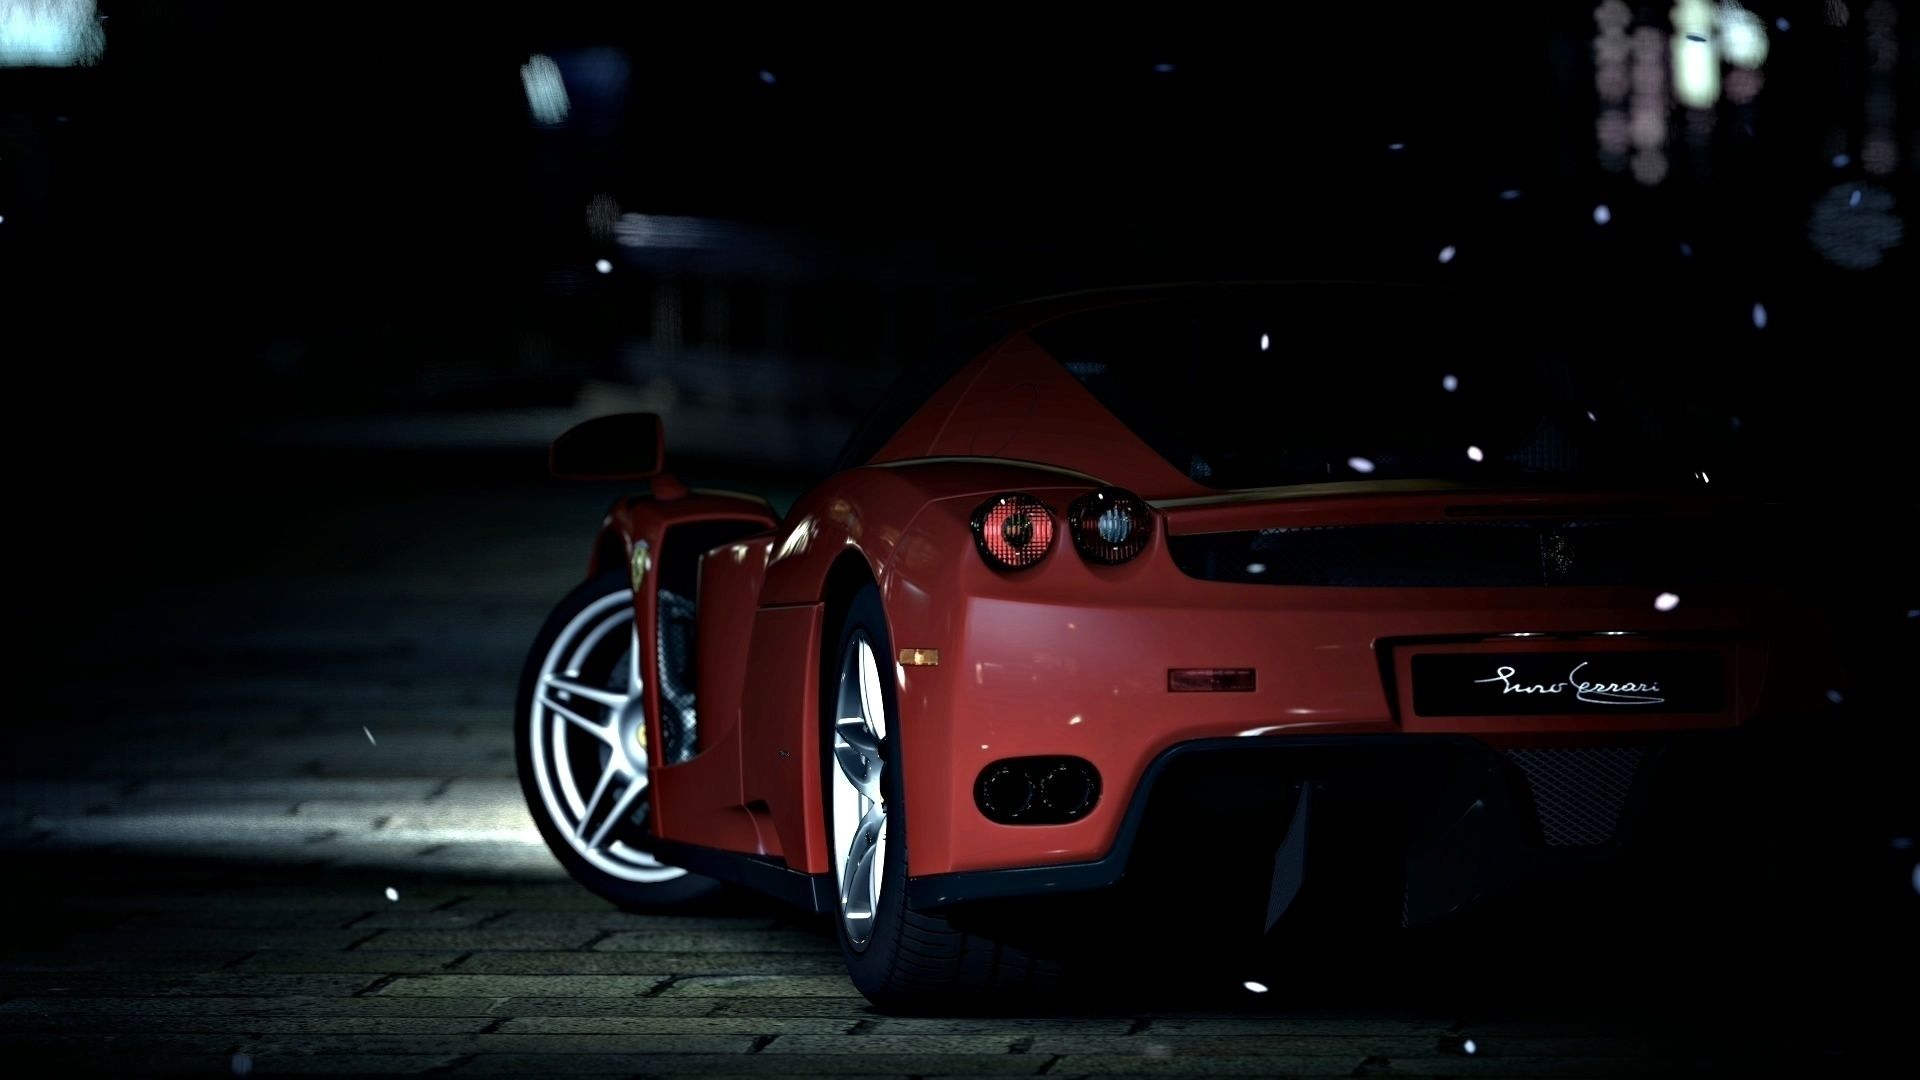 Red Ferrari Car Rear View at Night HD Desktop Wallpaper Background